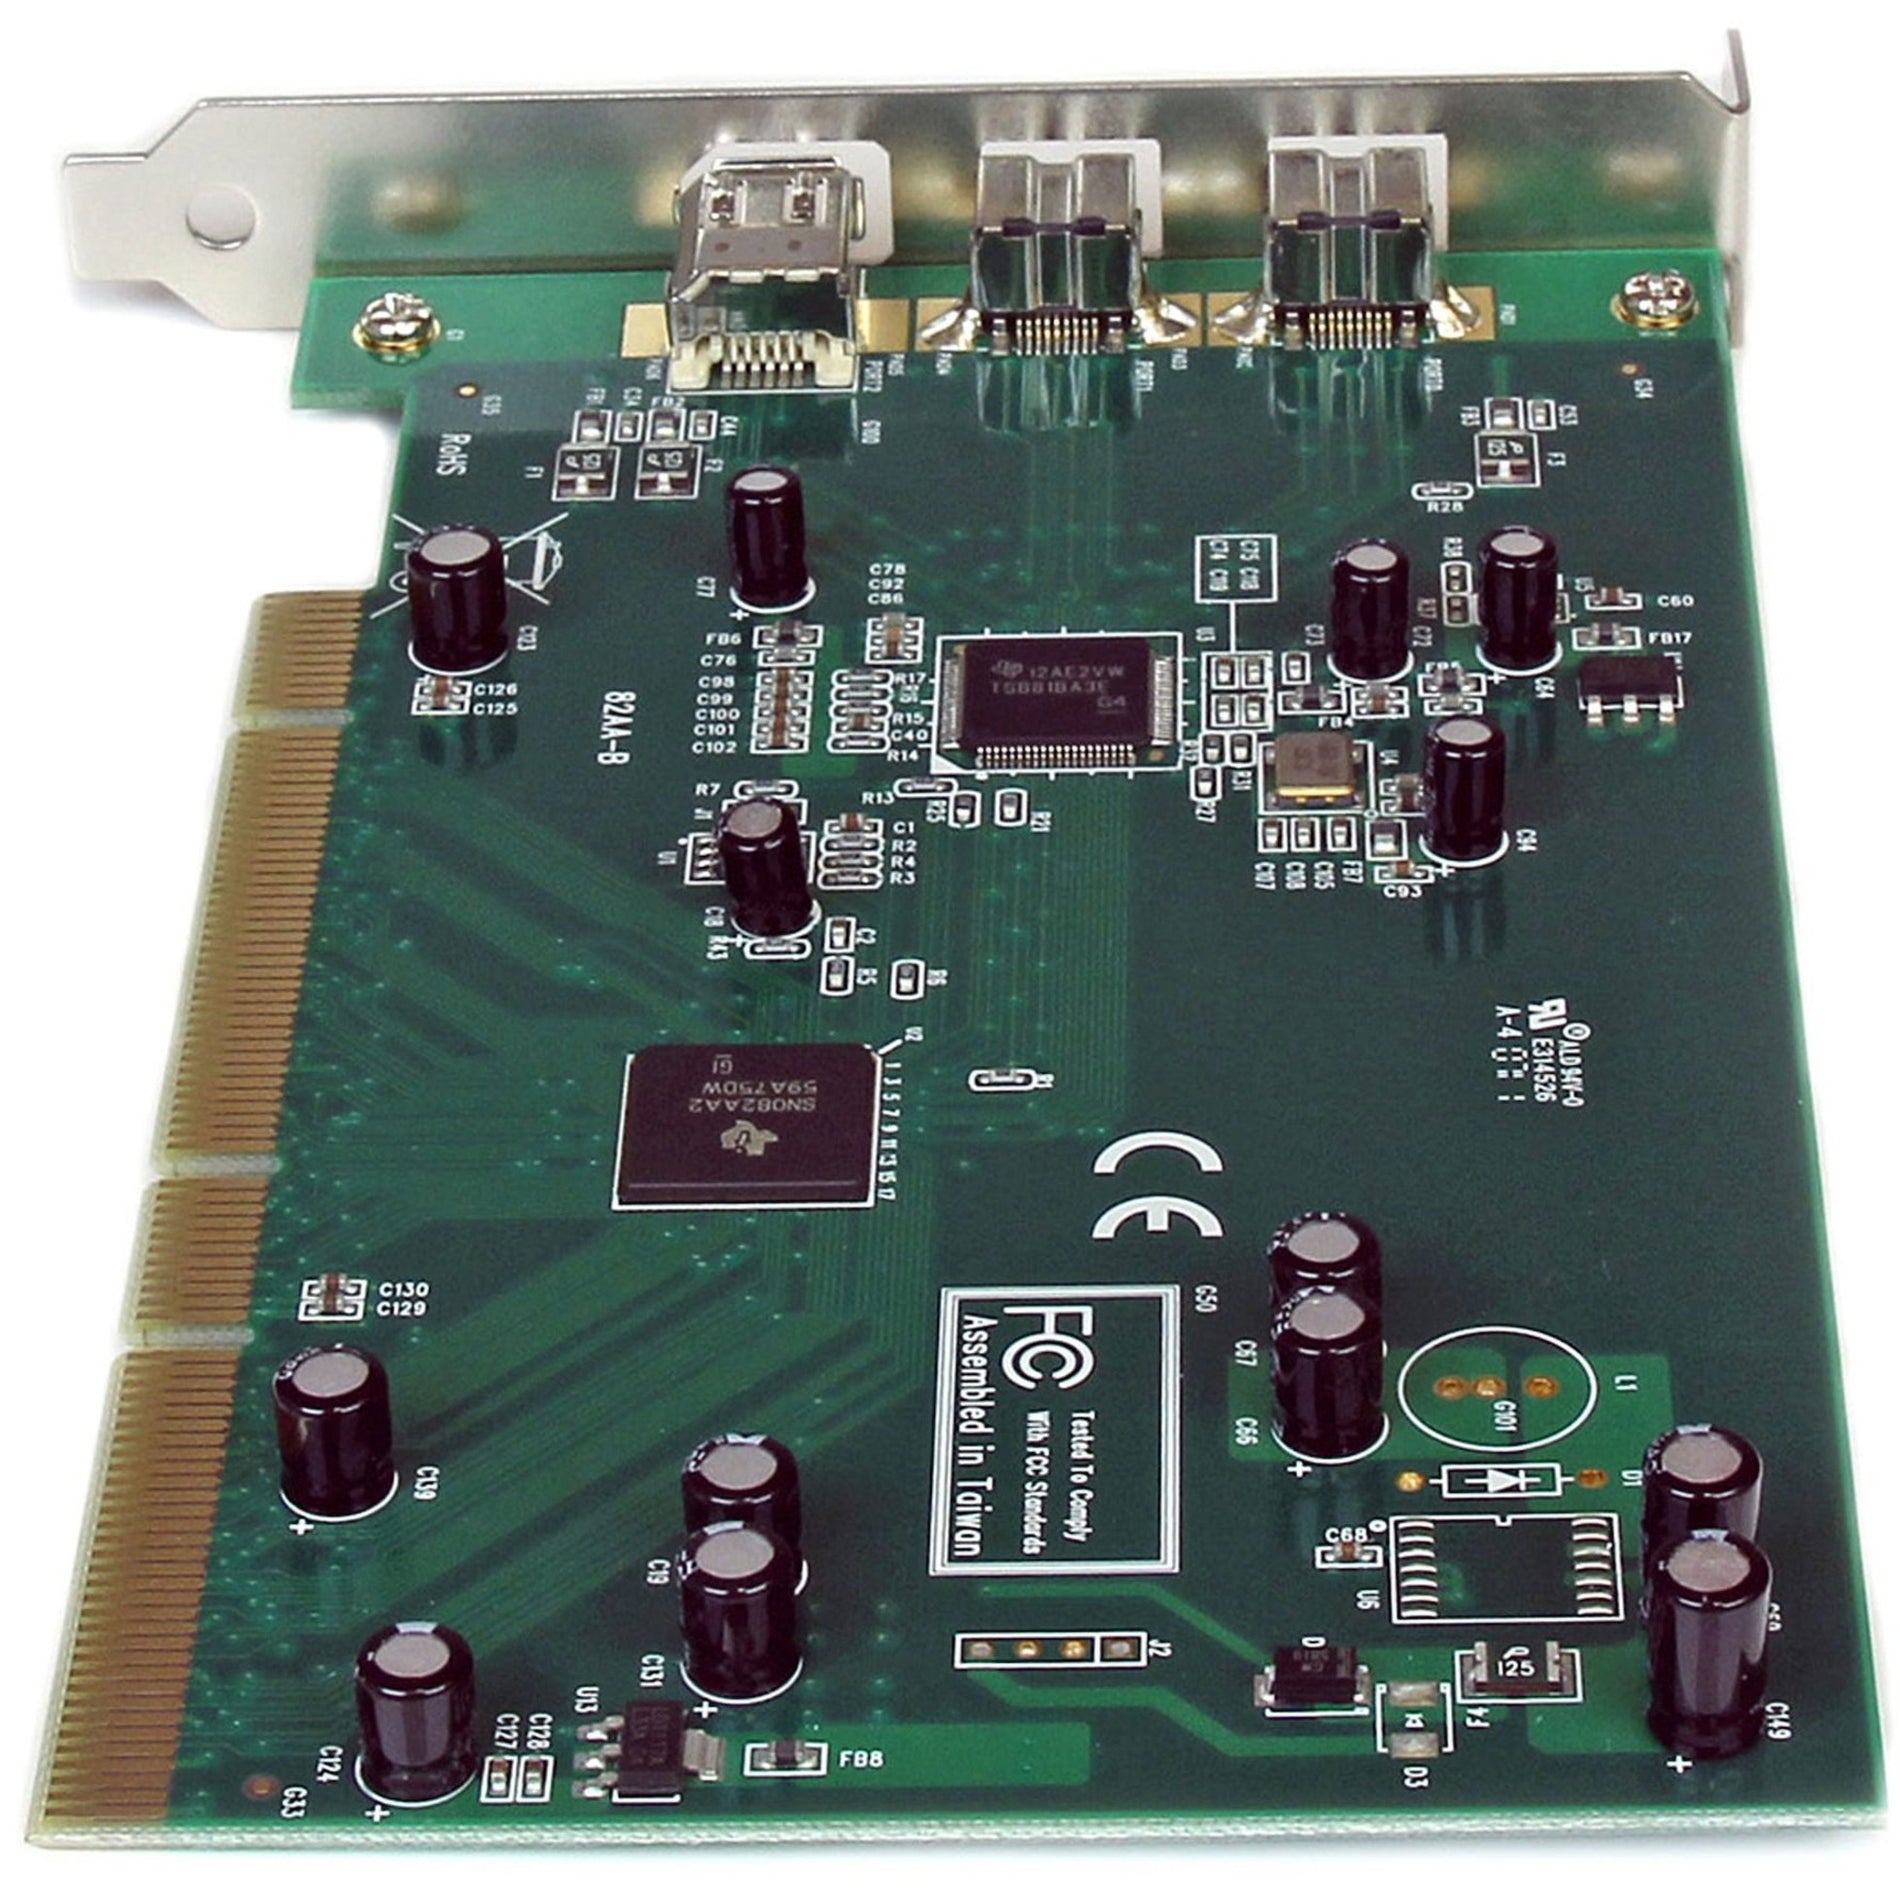 StarTech.com PCI1394B_3 3 Port 2b 1a PCI 1394b FireWire Adapter Card with DV Editing Kit, 800Mbps Data Transfer Speeds